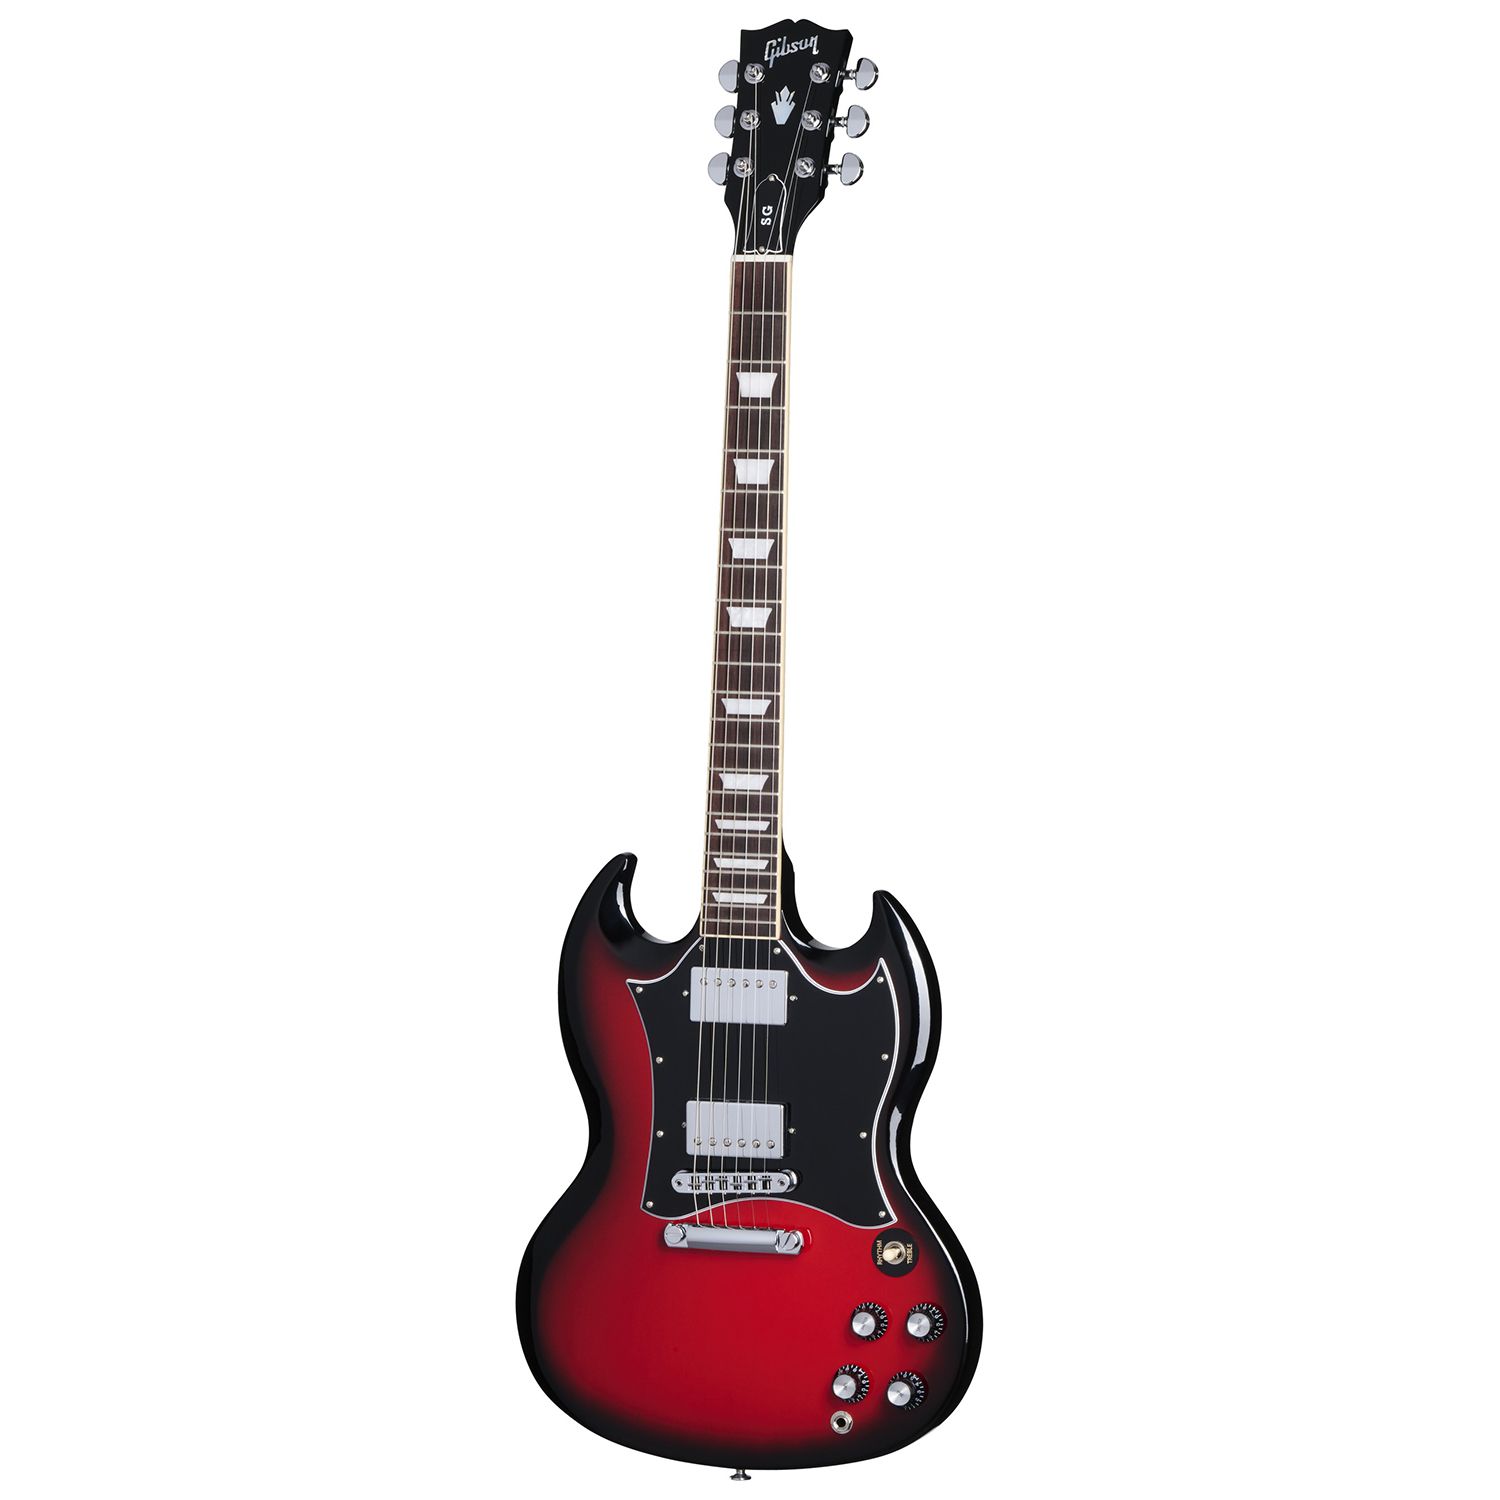 An image of Gibson USA Custom Color SG Standard Red Burst